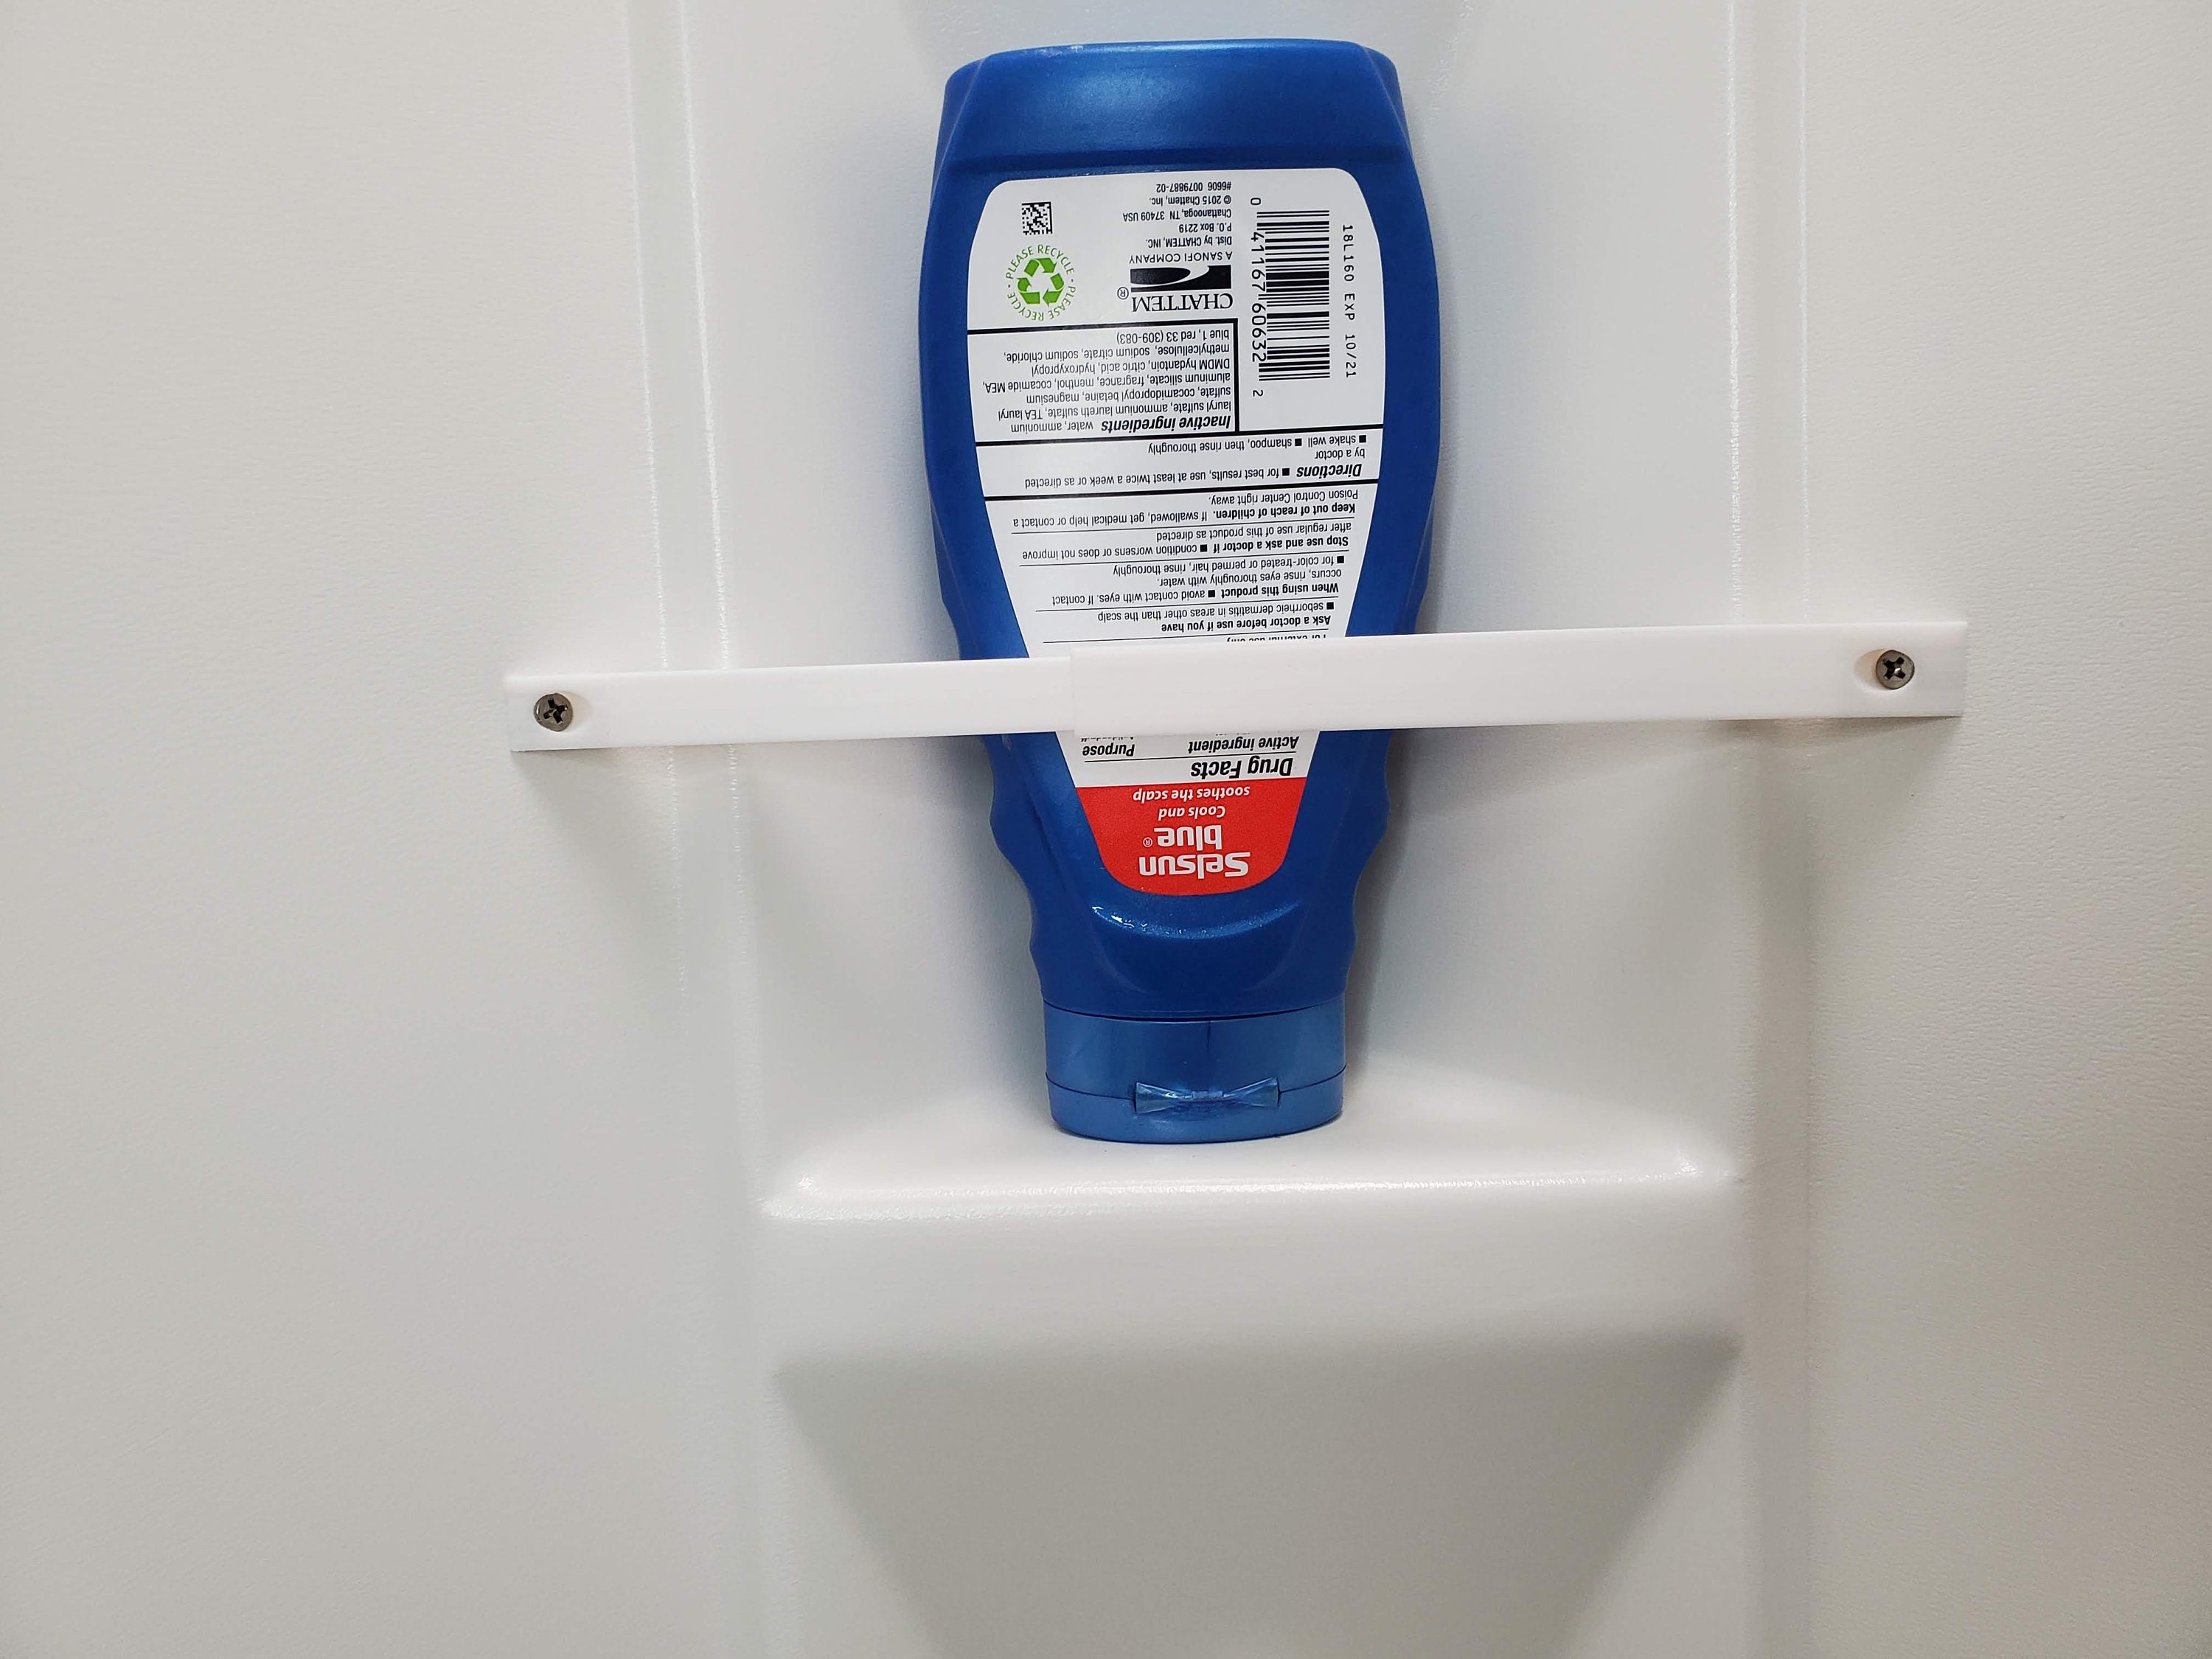 MICTUNING RV Shampoo Bottle Holder Fence Trailer Bathroom Corner